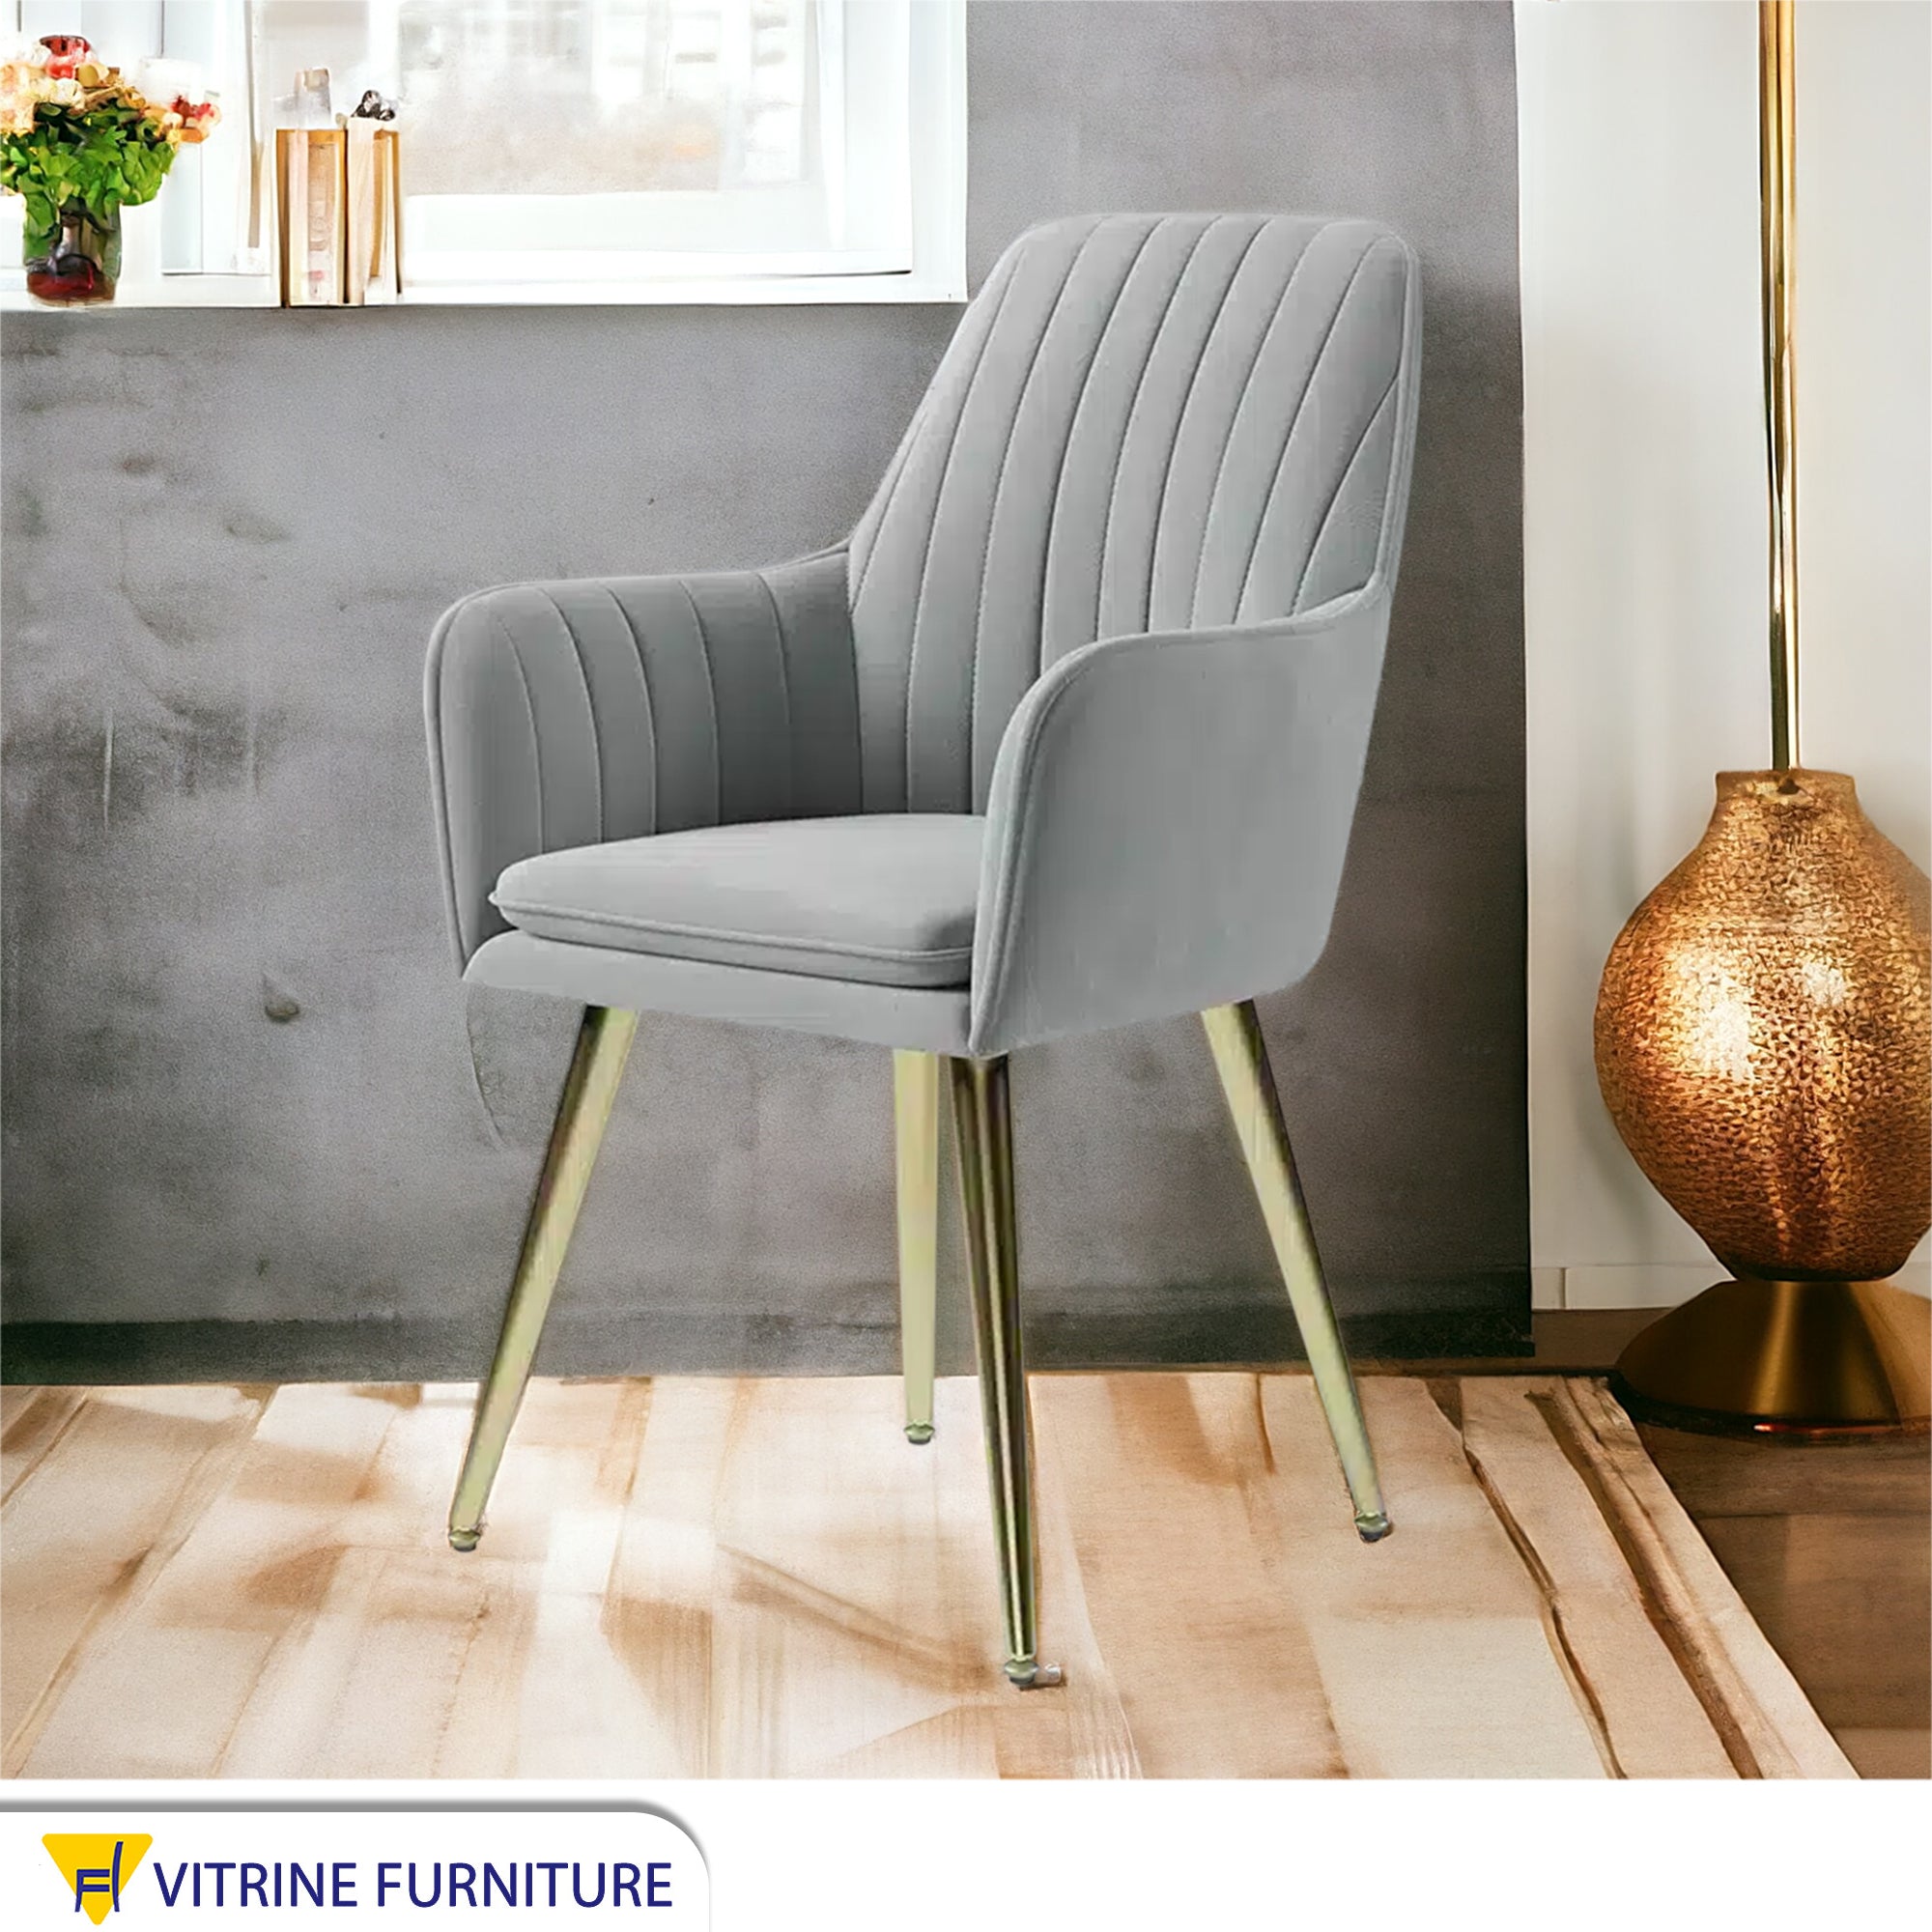 Light grey upholstered armchair